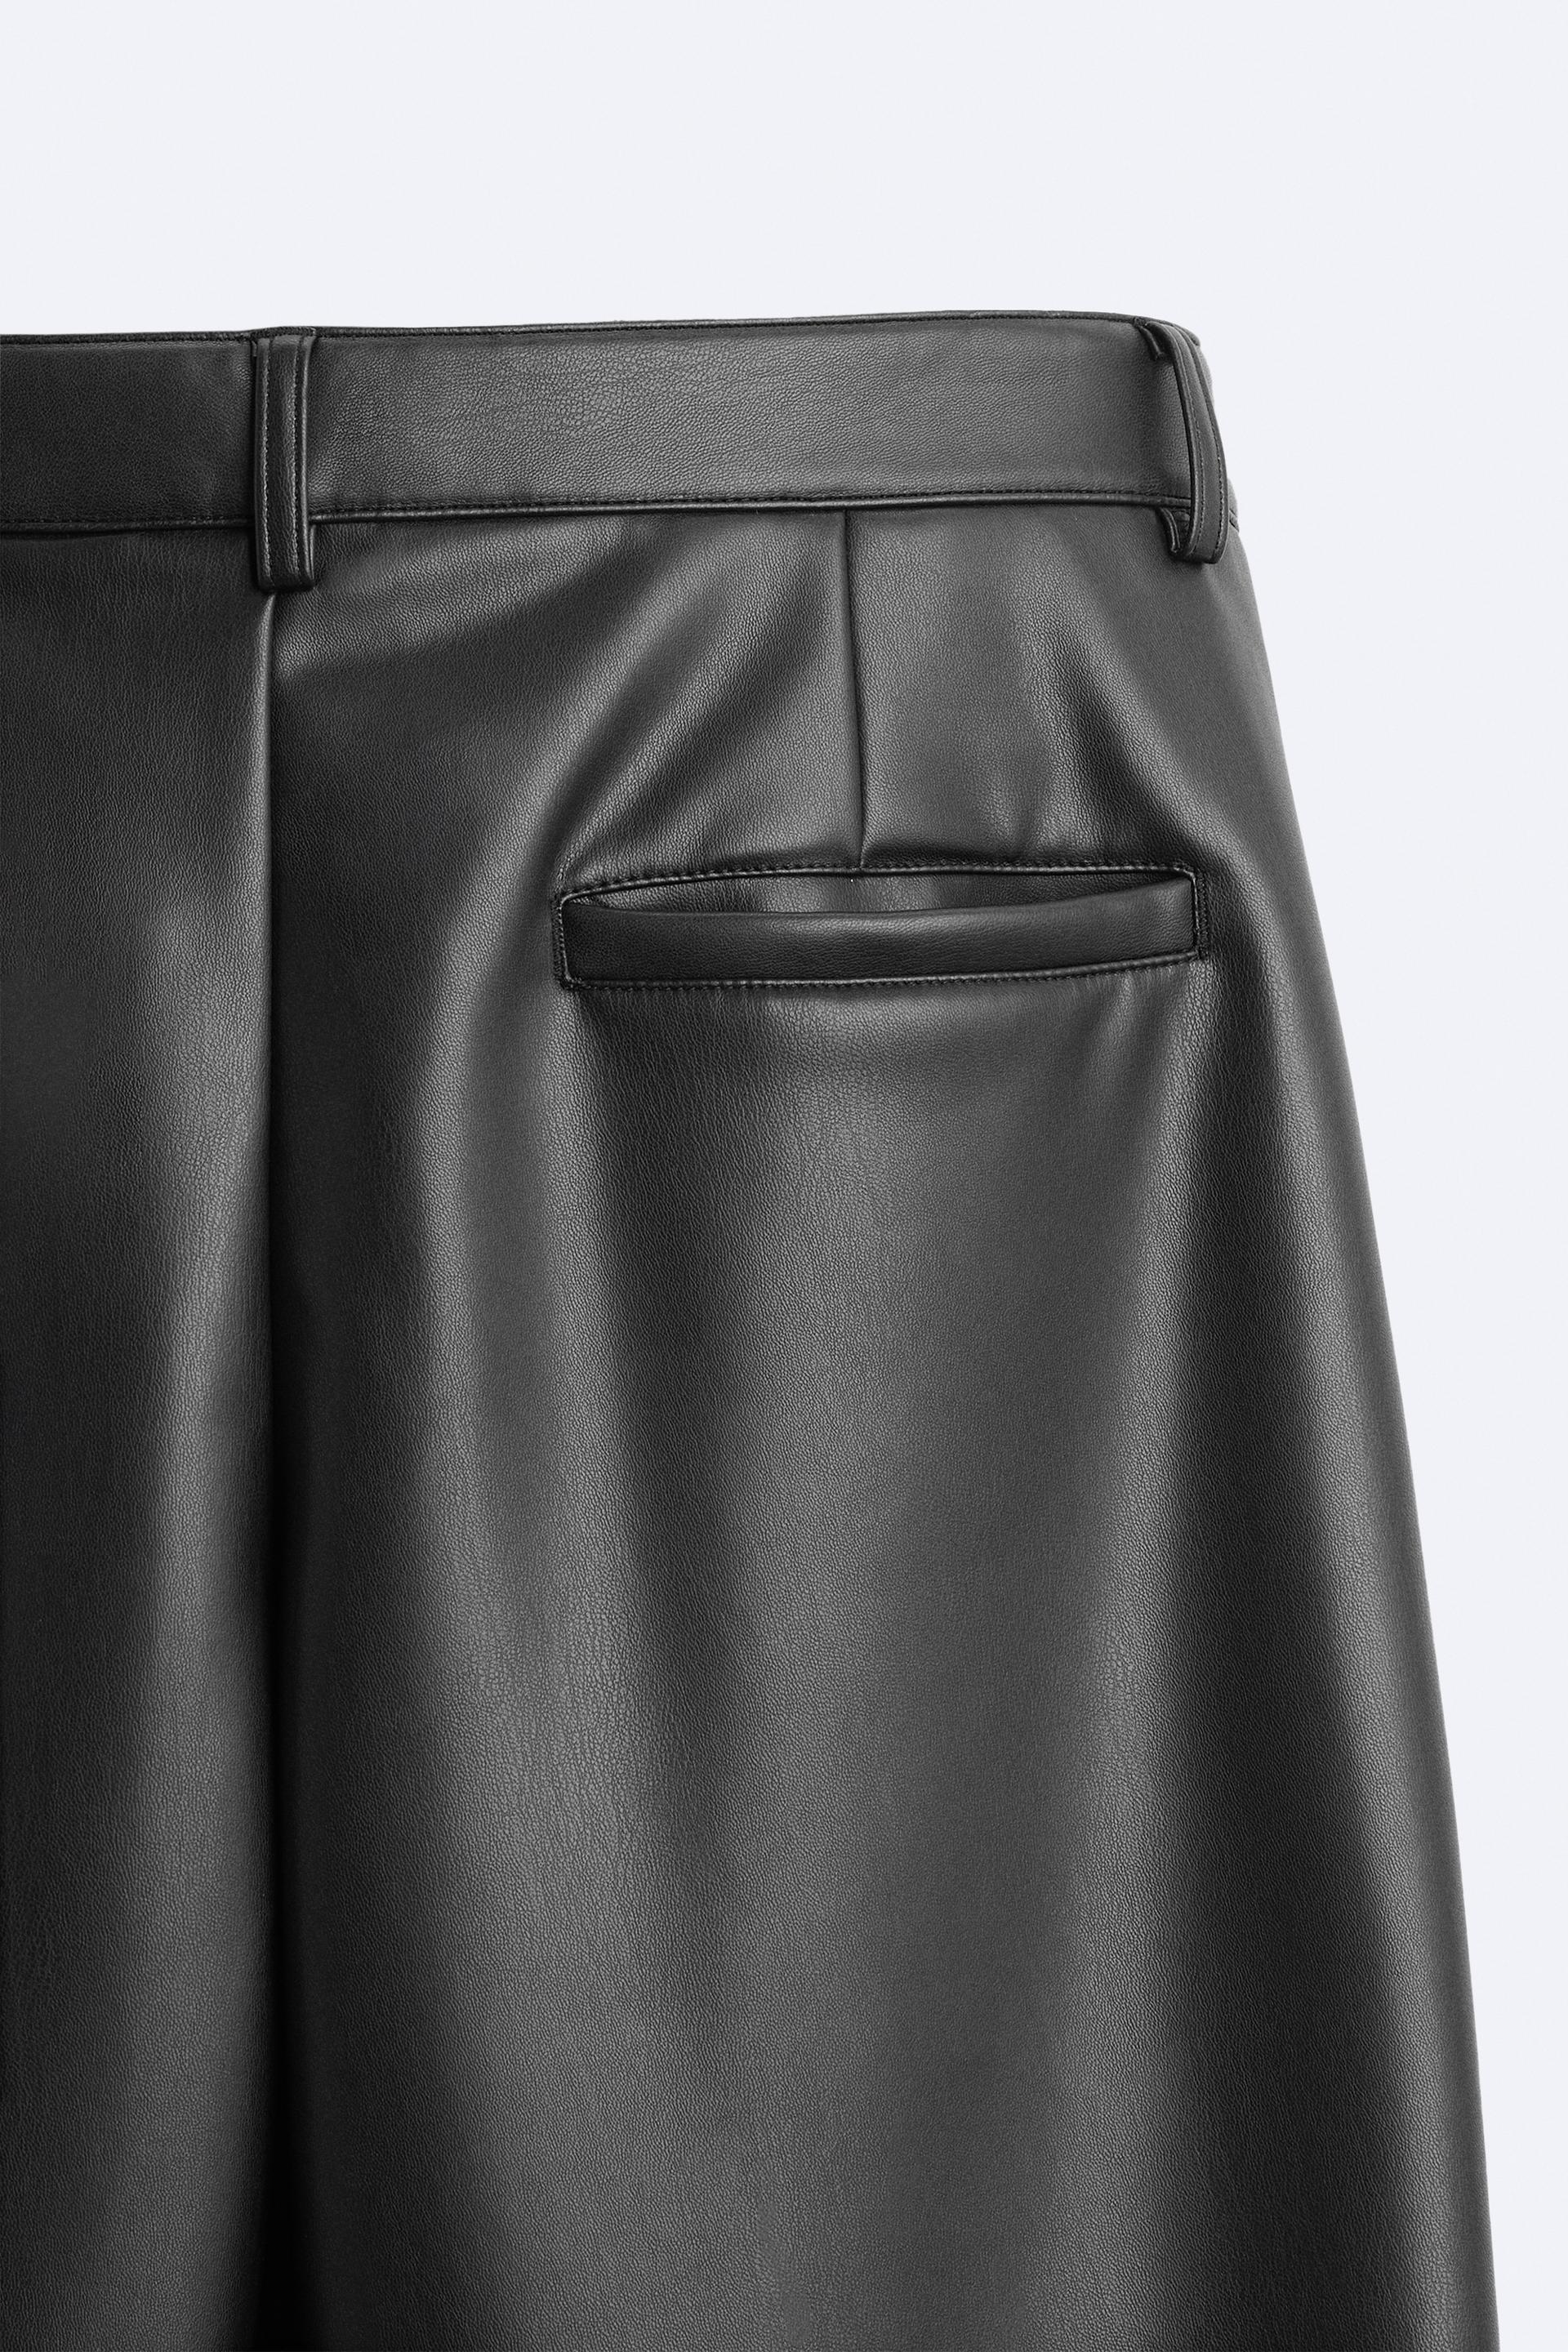 ZARA brown faux leather pants Size XS - $23 (61% Off Retail